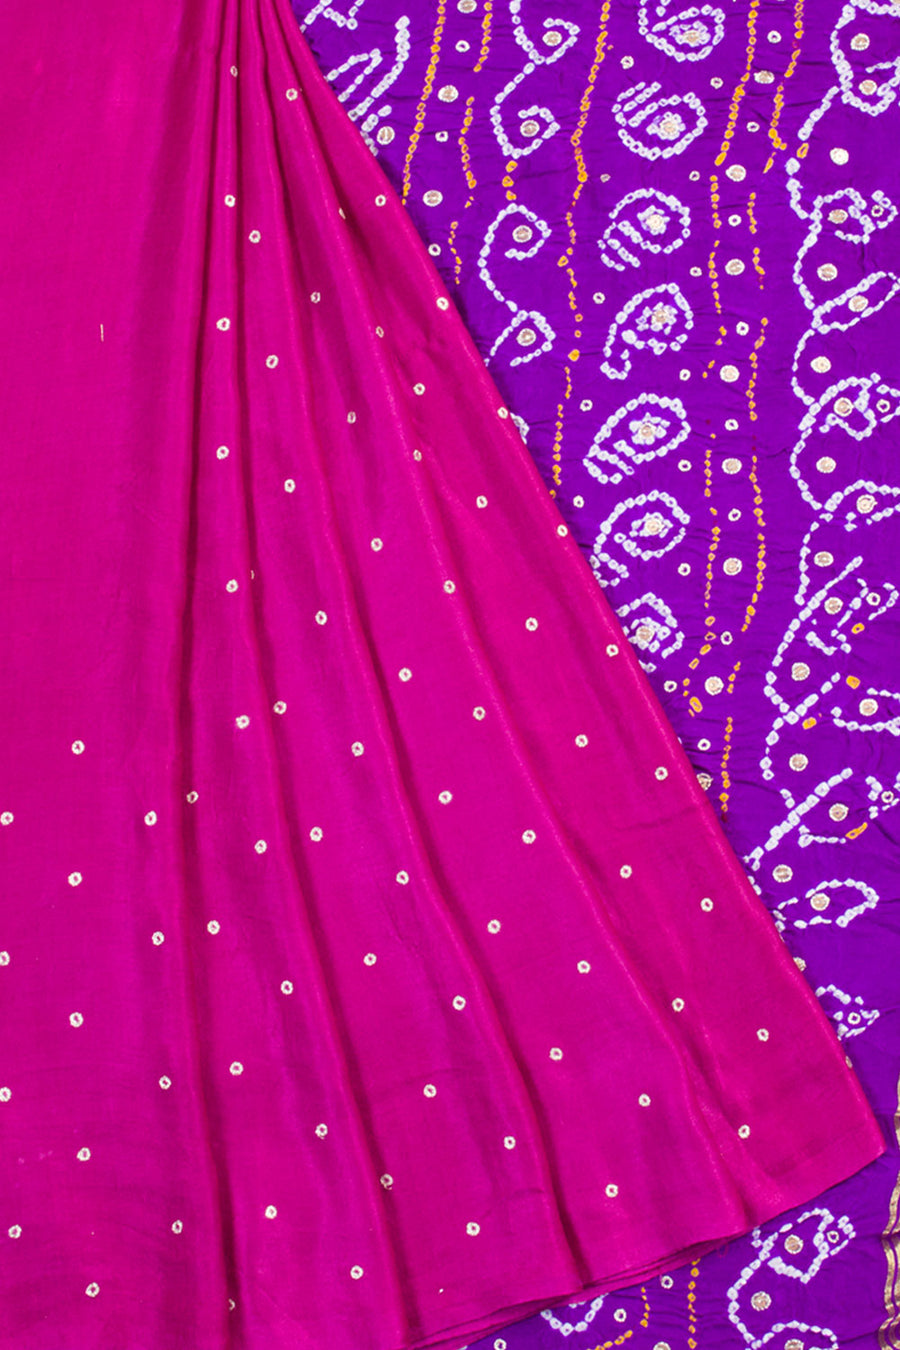 Handcrafted Bandhani Gajji Silk Saree with Shikari Pallu, Dana tar Blouse, Zari Embroidery and Sequin Work